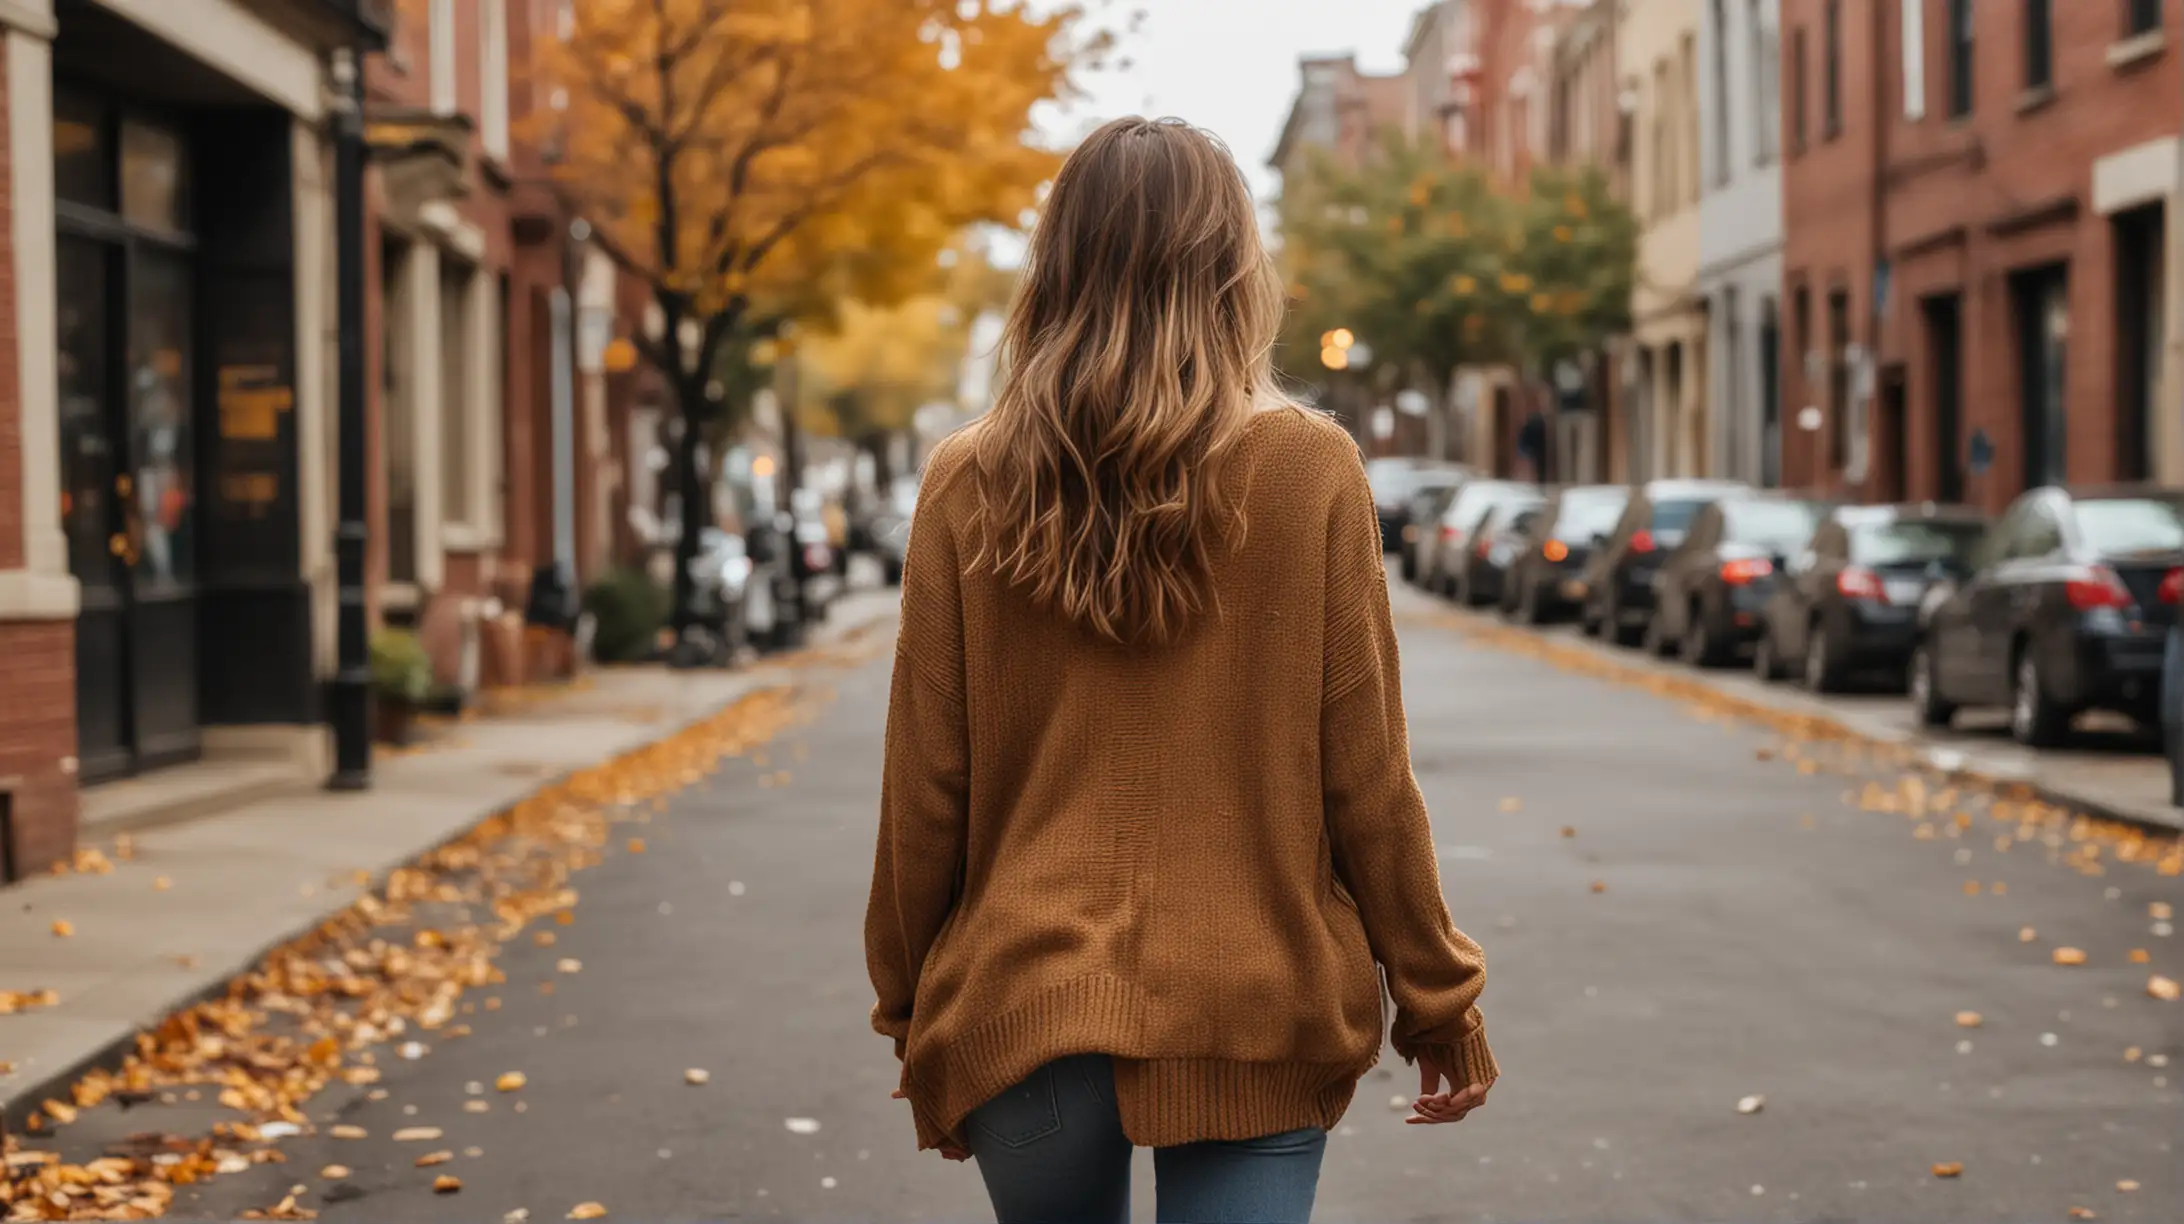 Young American Woman Walking in Autumn Street Fashion